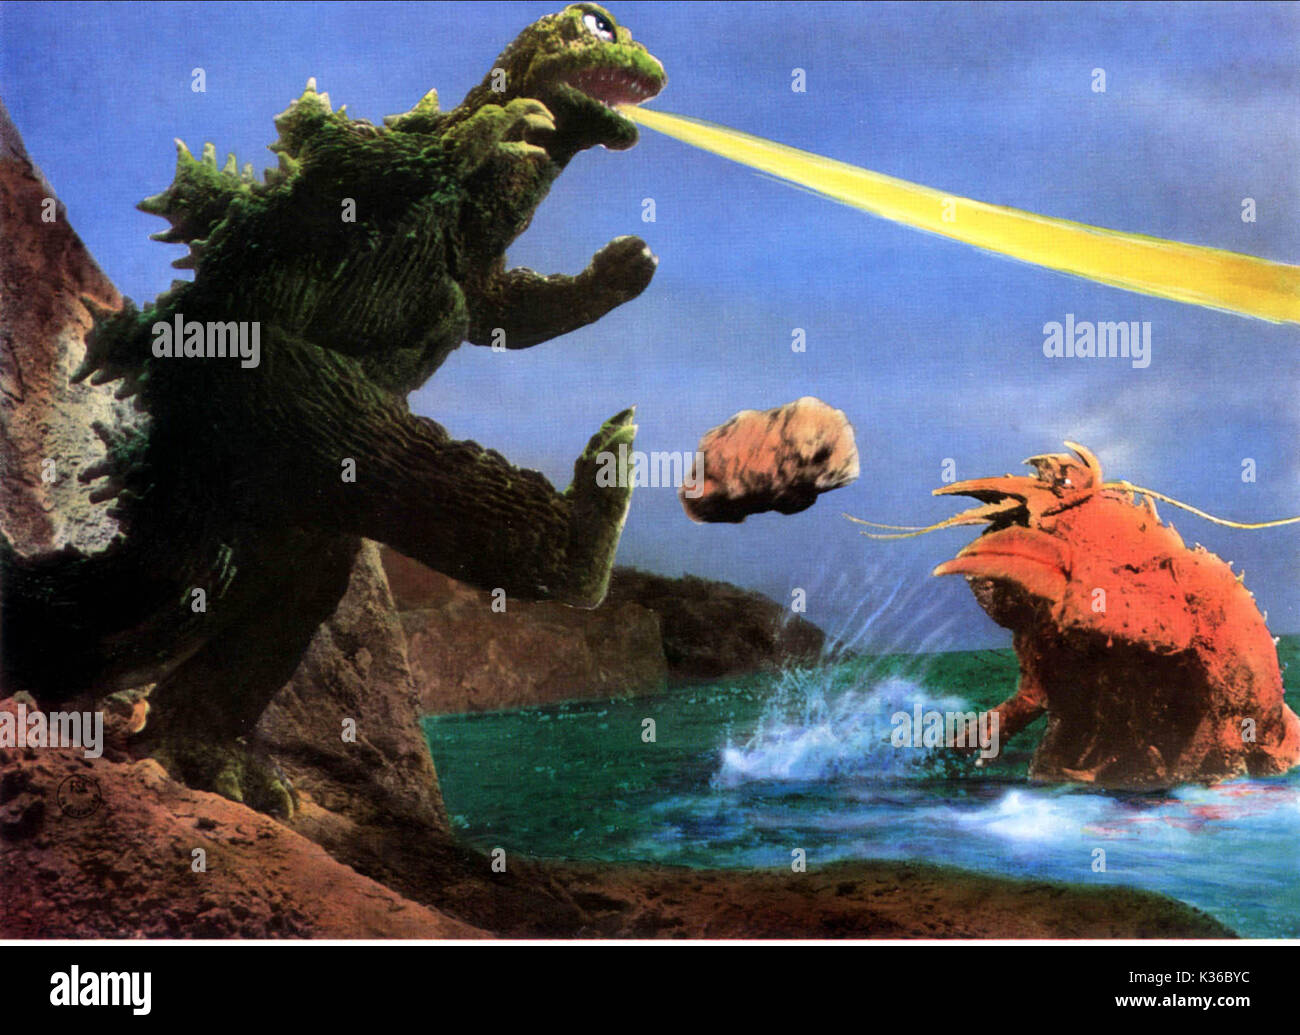 Godzilla movie hi-res stock photography and images - Alamy